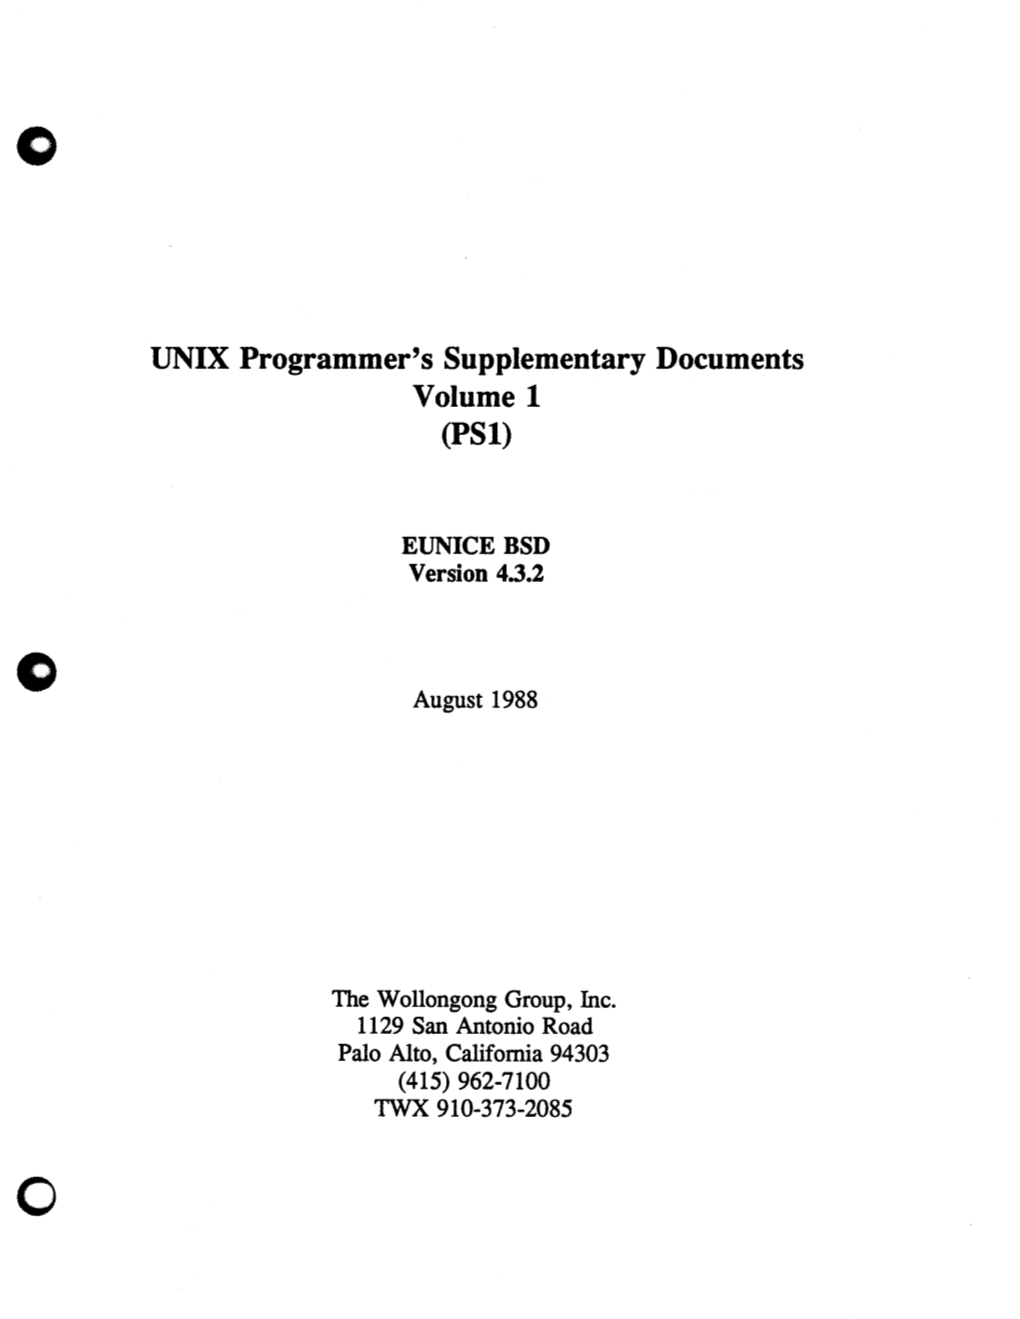 Eunice BSD 4.3.2 UNIX Programmer's Supplementary Documents